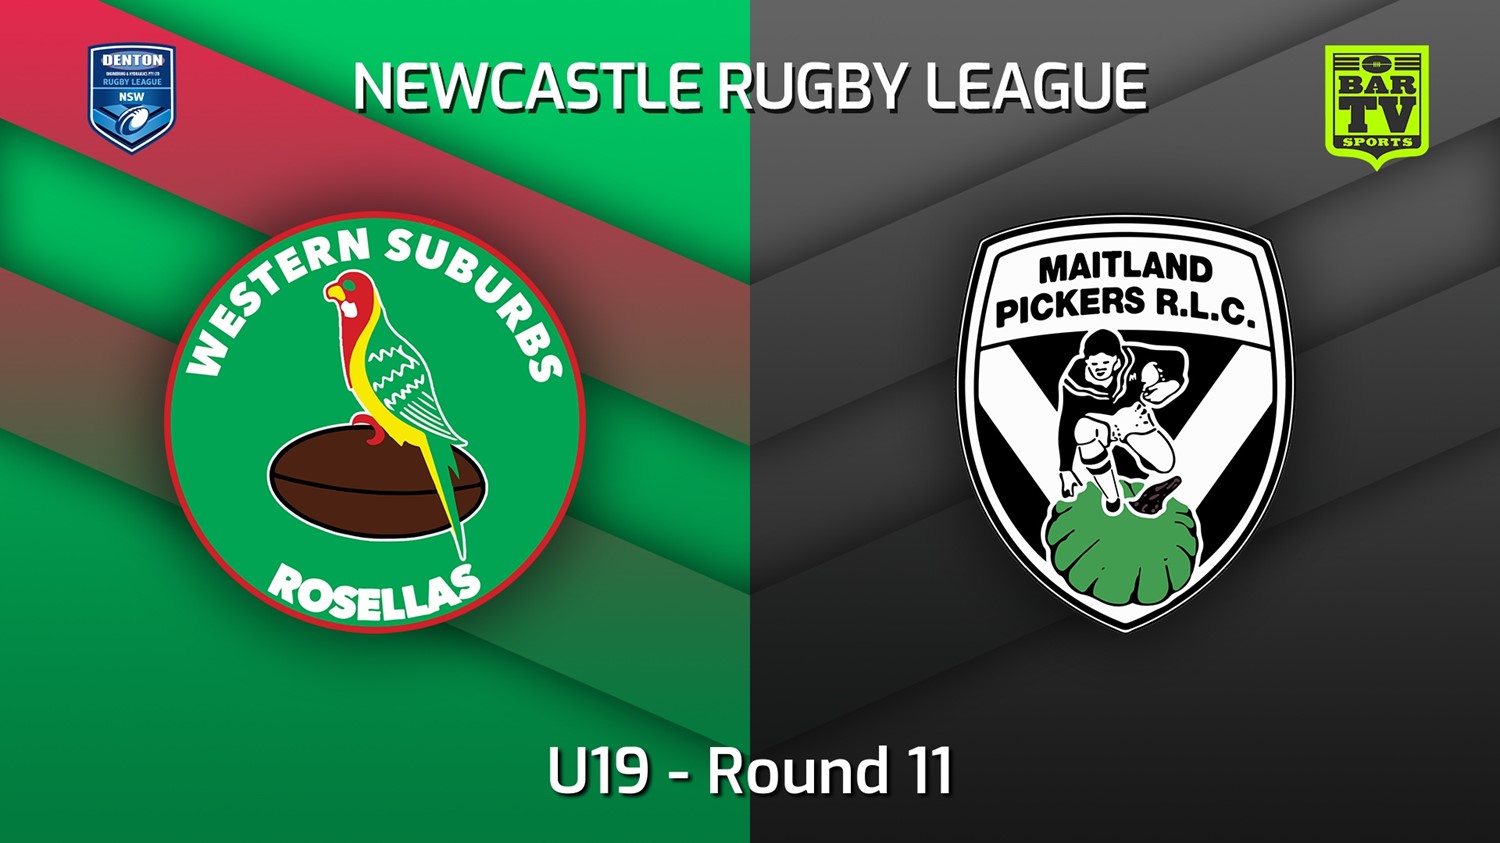 220611-Newcastle Round 11 - U19 - Western Suburbs Rosellas v Maitland Pickers Slate Image